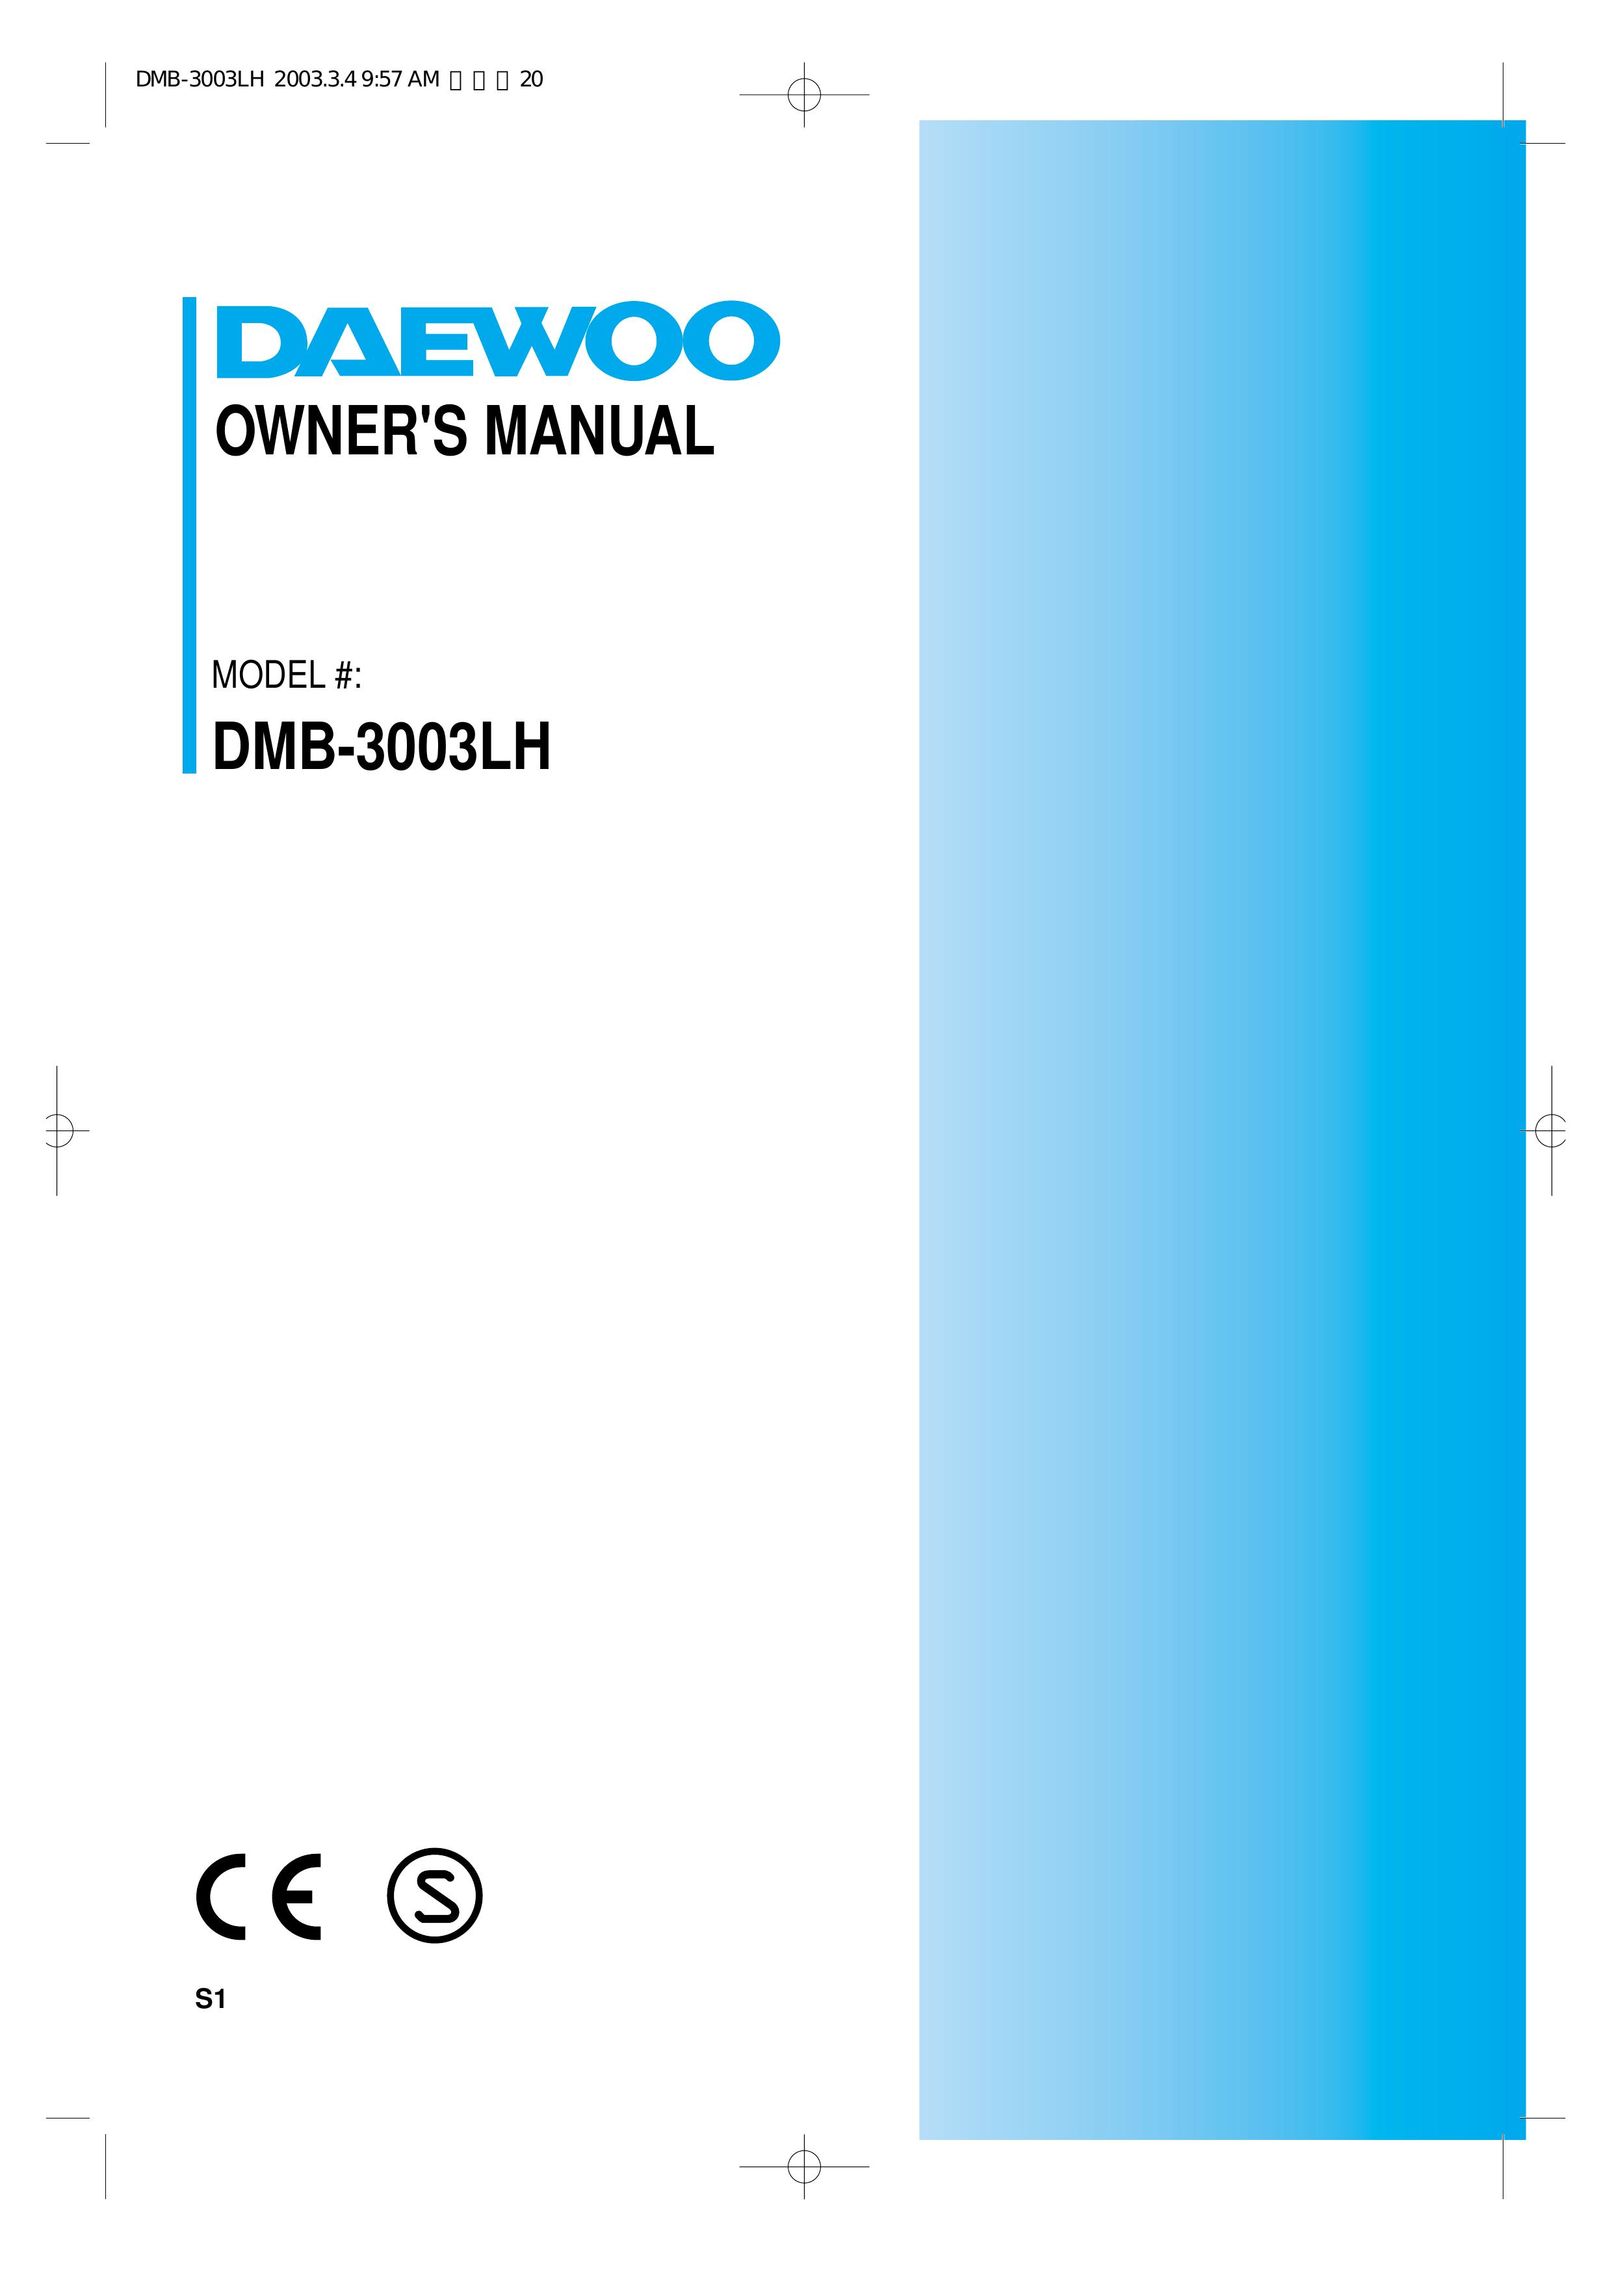 Daewoo DMB-3003LH Air Conditioner User Manual